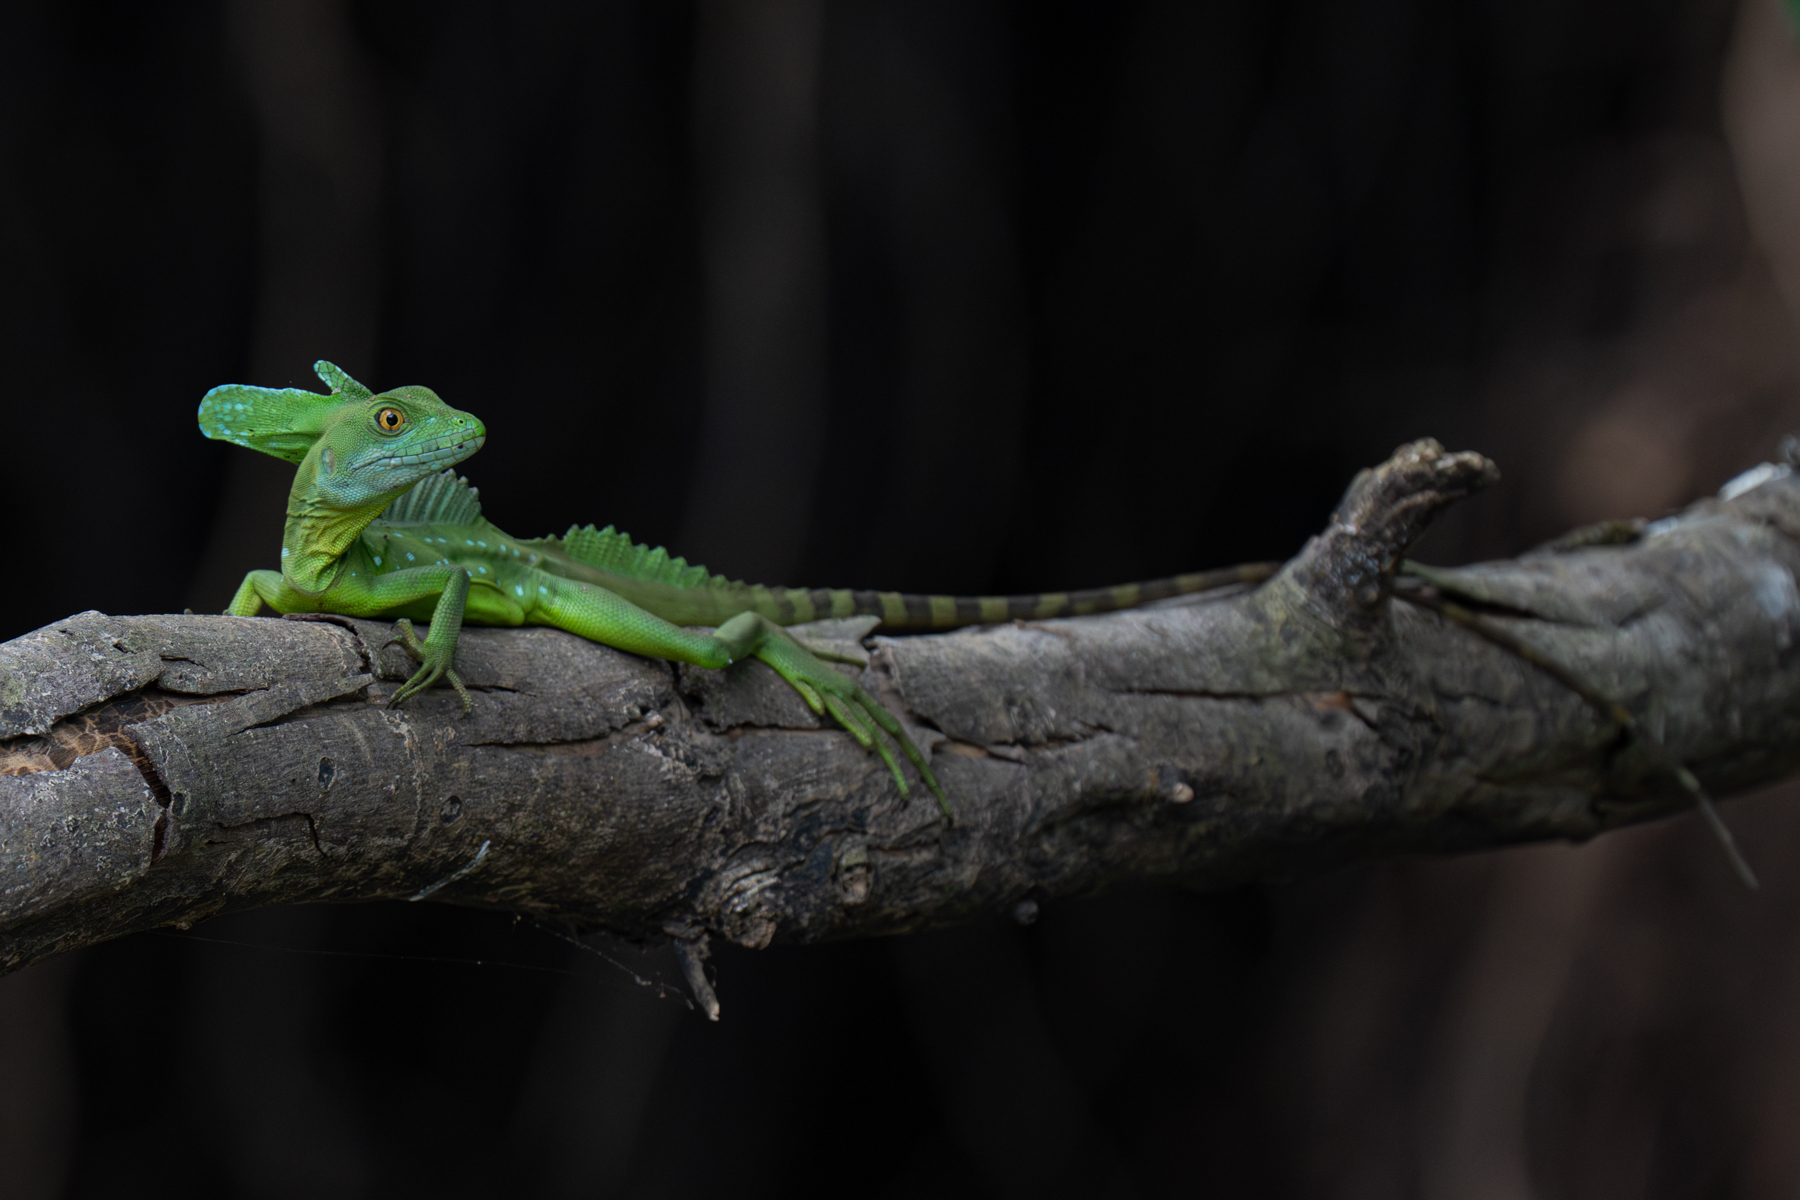 An Emerald Basilisk lounging on a branch (image by Inger Vandyke)